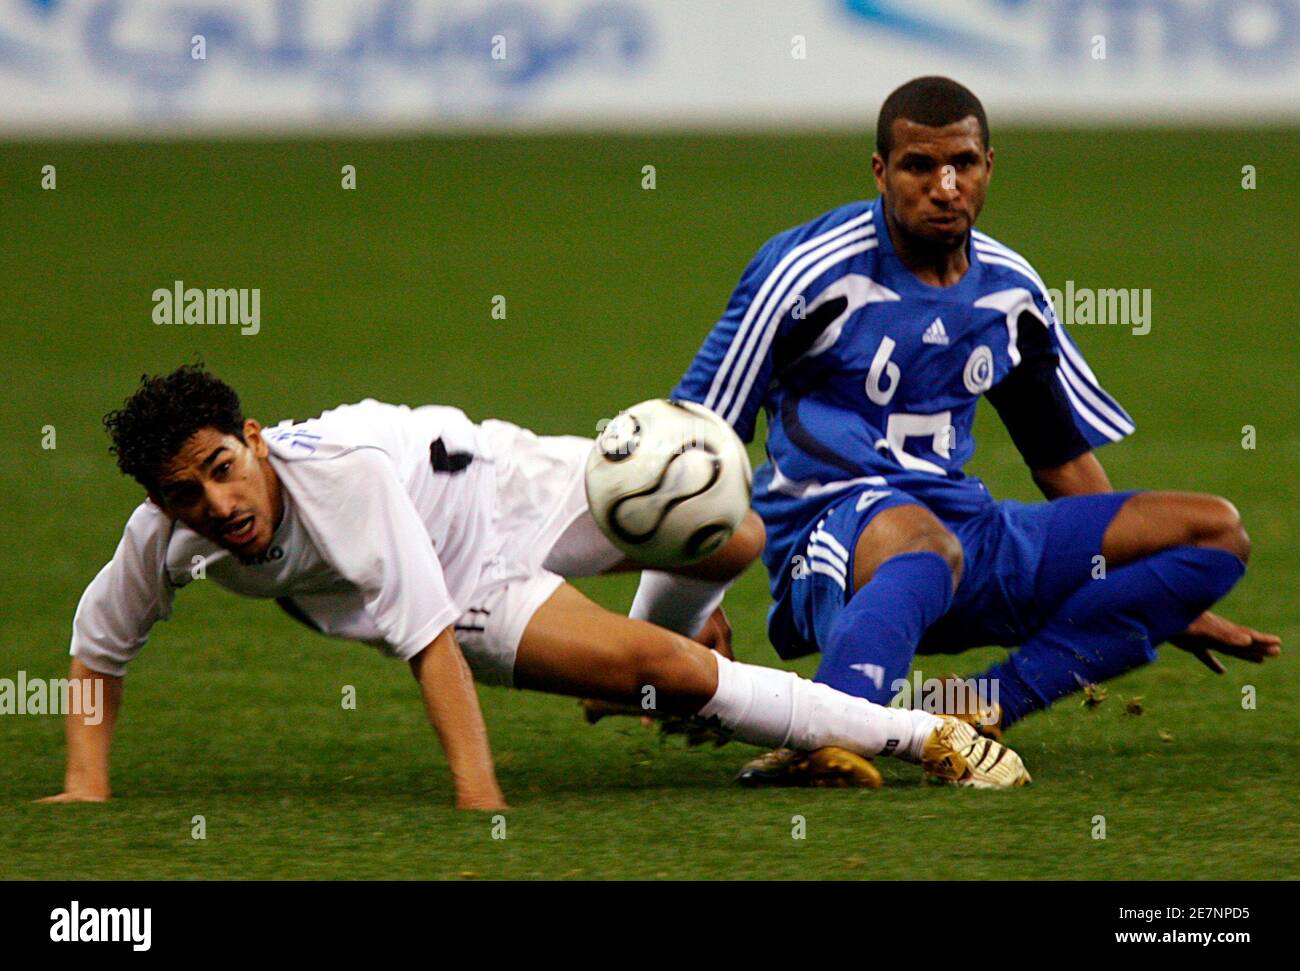 Al Hilal's Khaled Al Zakar (R) fights for the ball with Al Shabab's Ahmed Oteef during their Saudi Crown Prince Cup qualifying soccer match in Riyadh March 1, 2008. REUTERS/Fahad Shadeed (SAUDI ARABIA) Stock Photo